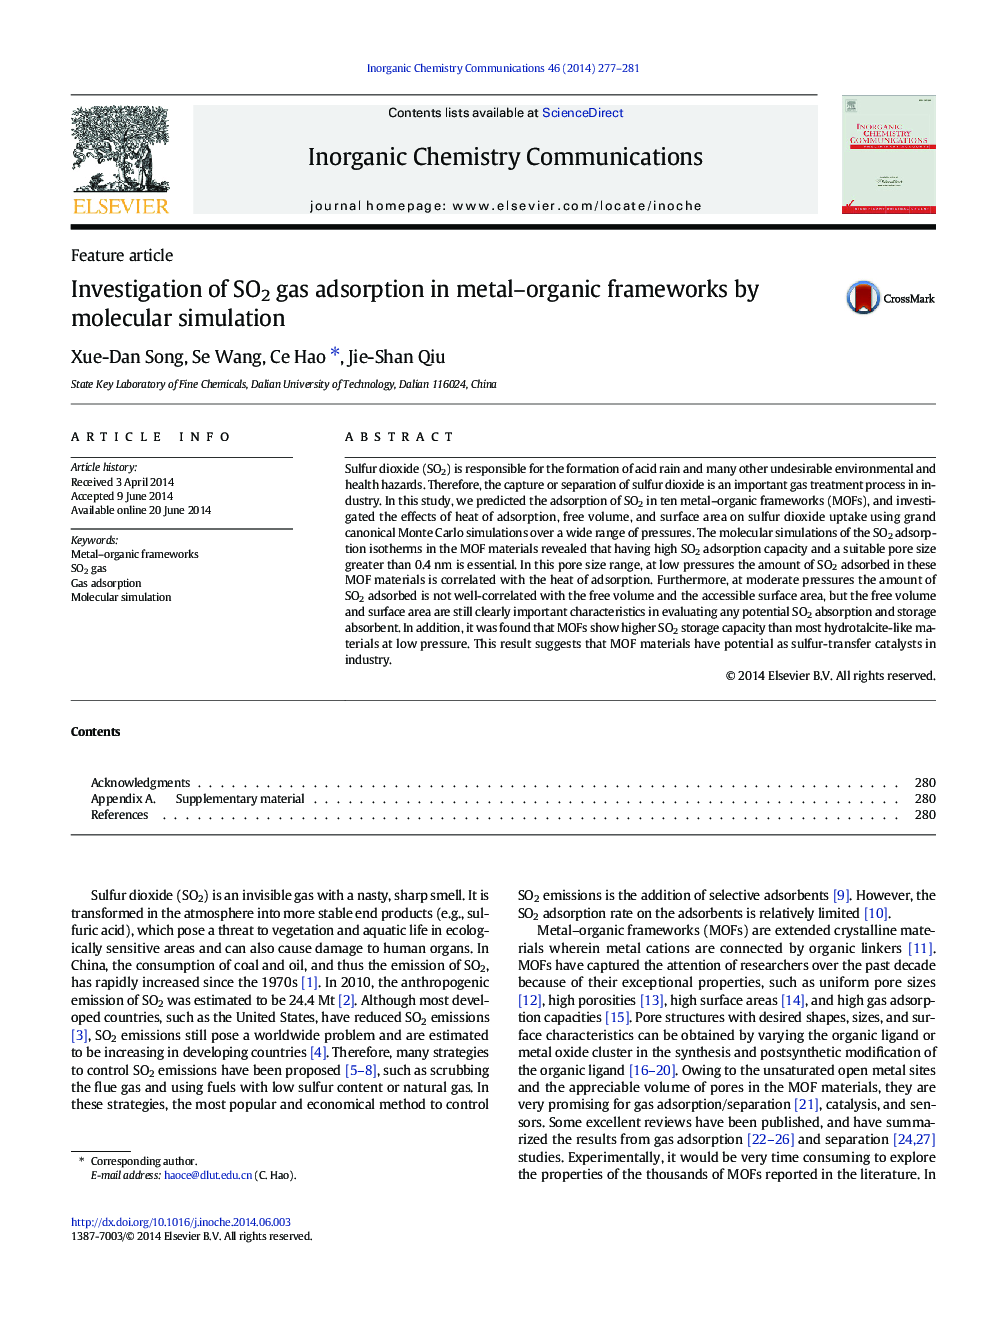 Investigation of SO2 gas adsorption in metal–organic frameworks by molecular simulation